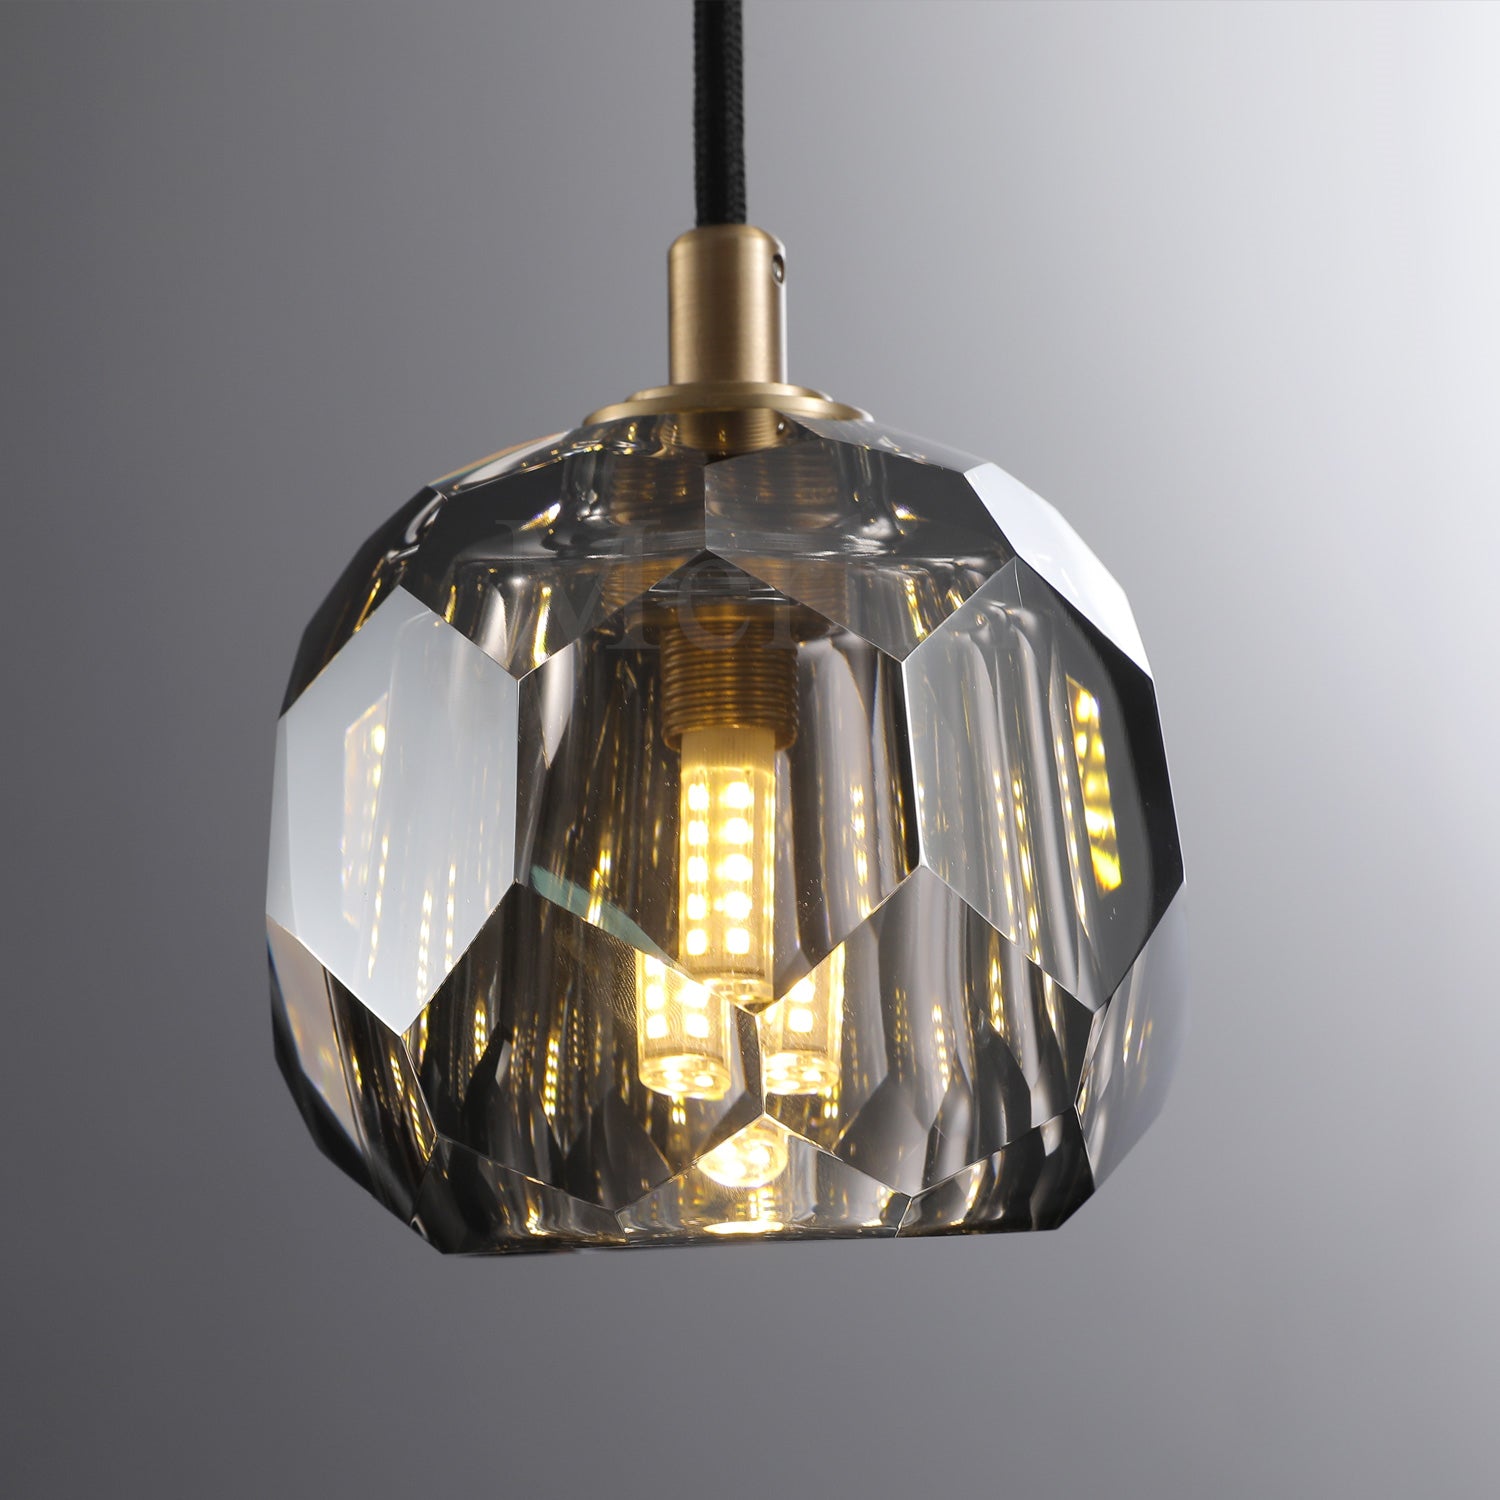 Kristal Ball Crystal Pendant Lighting, Minimalist Pendant Lamp Perfect for Modern Kitchen Islands